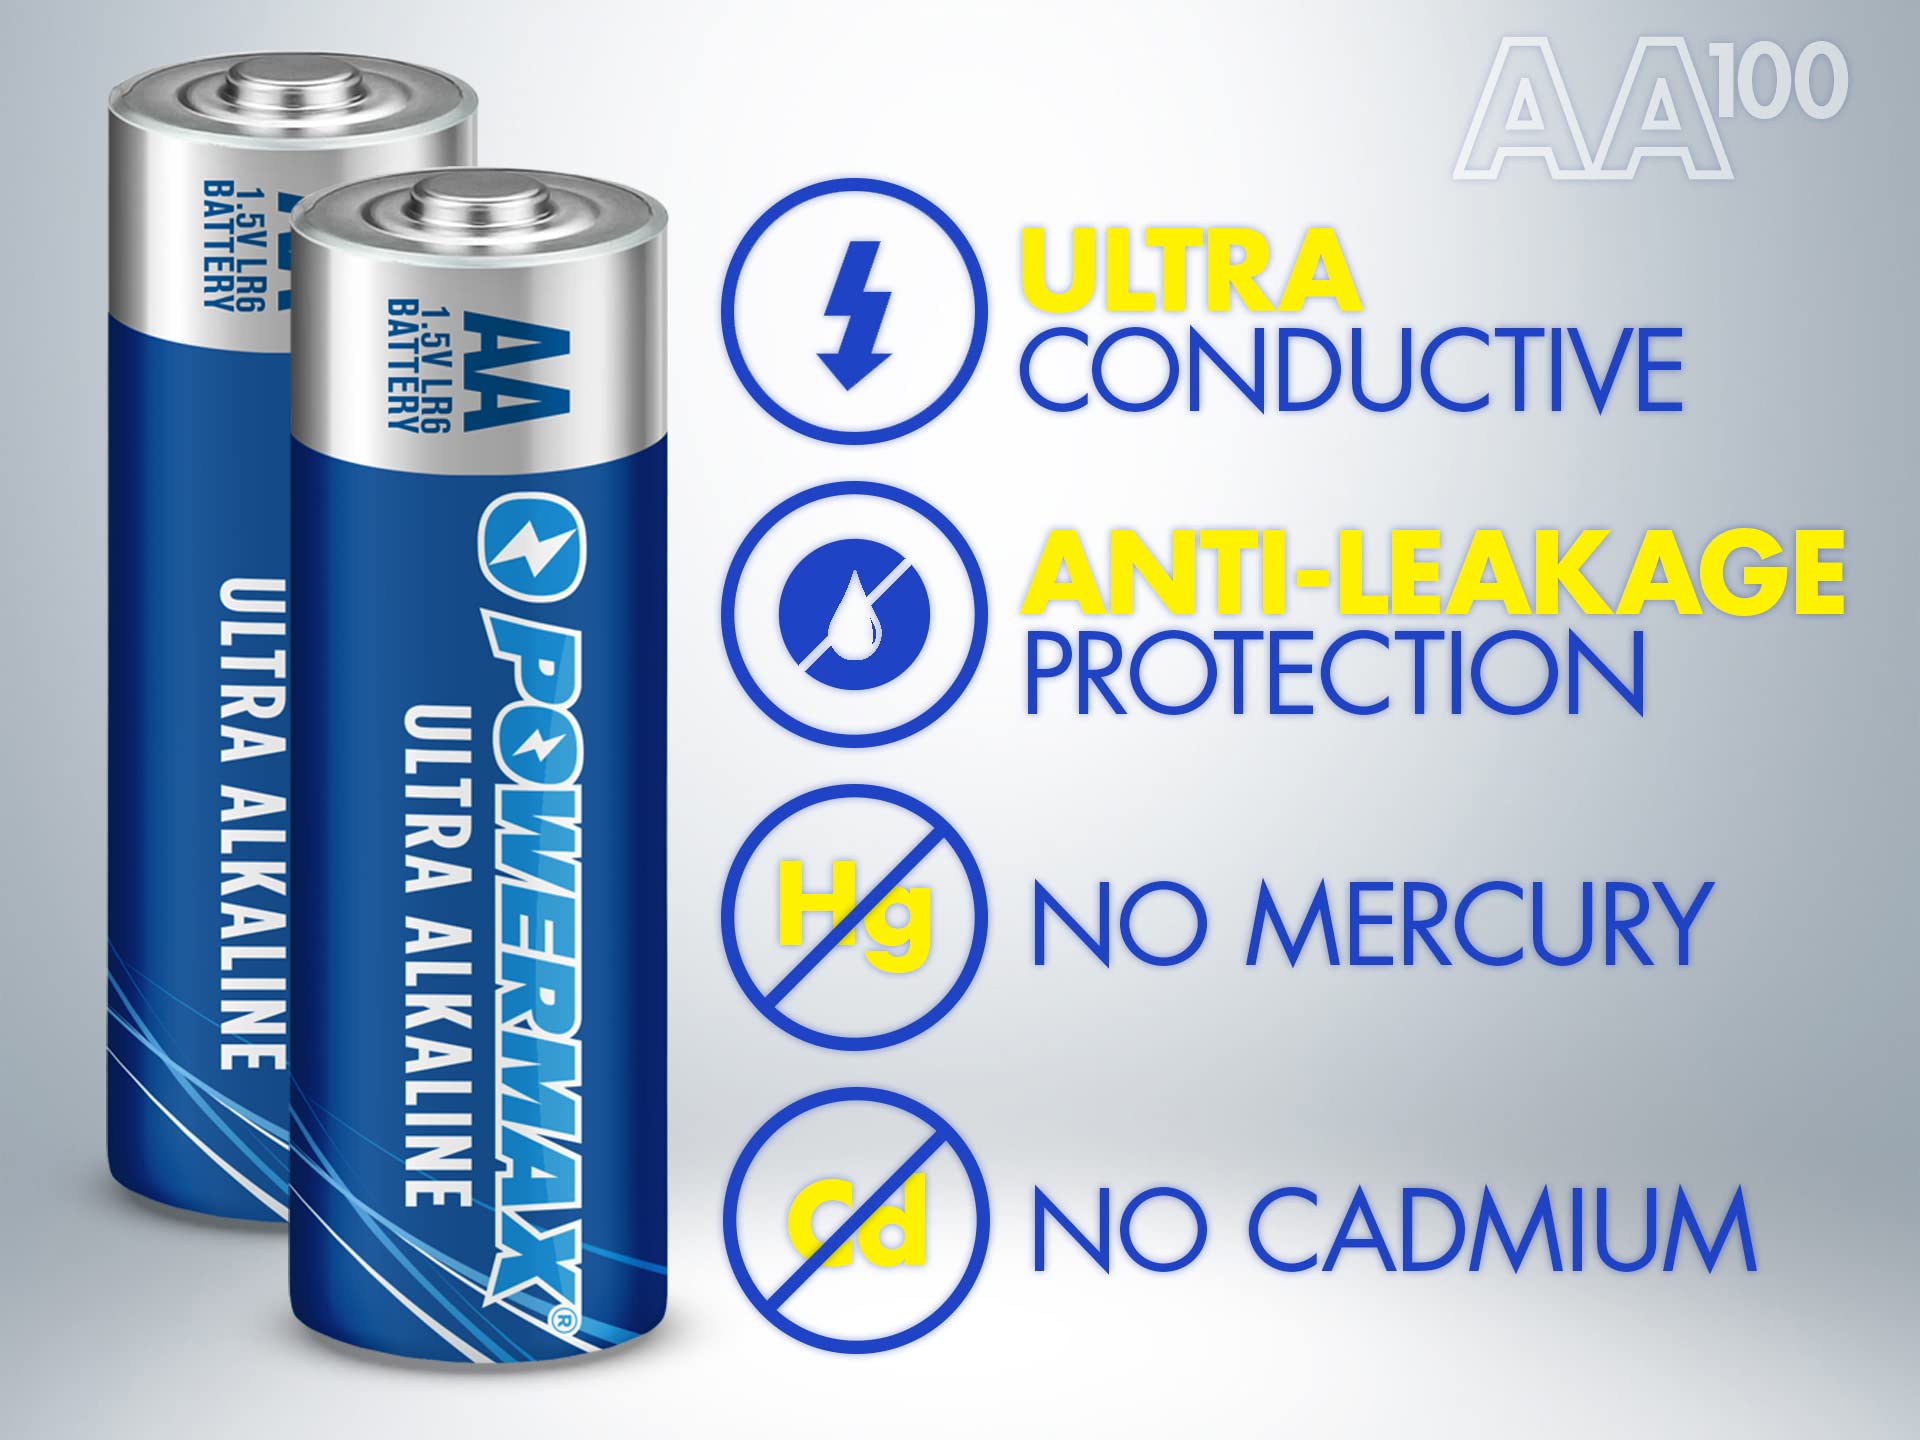 Powermax 100-Count AA Batteries, Ultra Long Lasting Alkaline Battery, 10-Year Shelf Life, Recloseable Packaging 100 Count (Pack of 1)